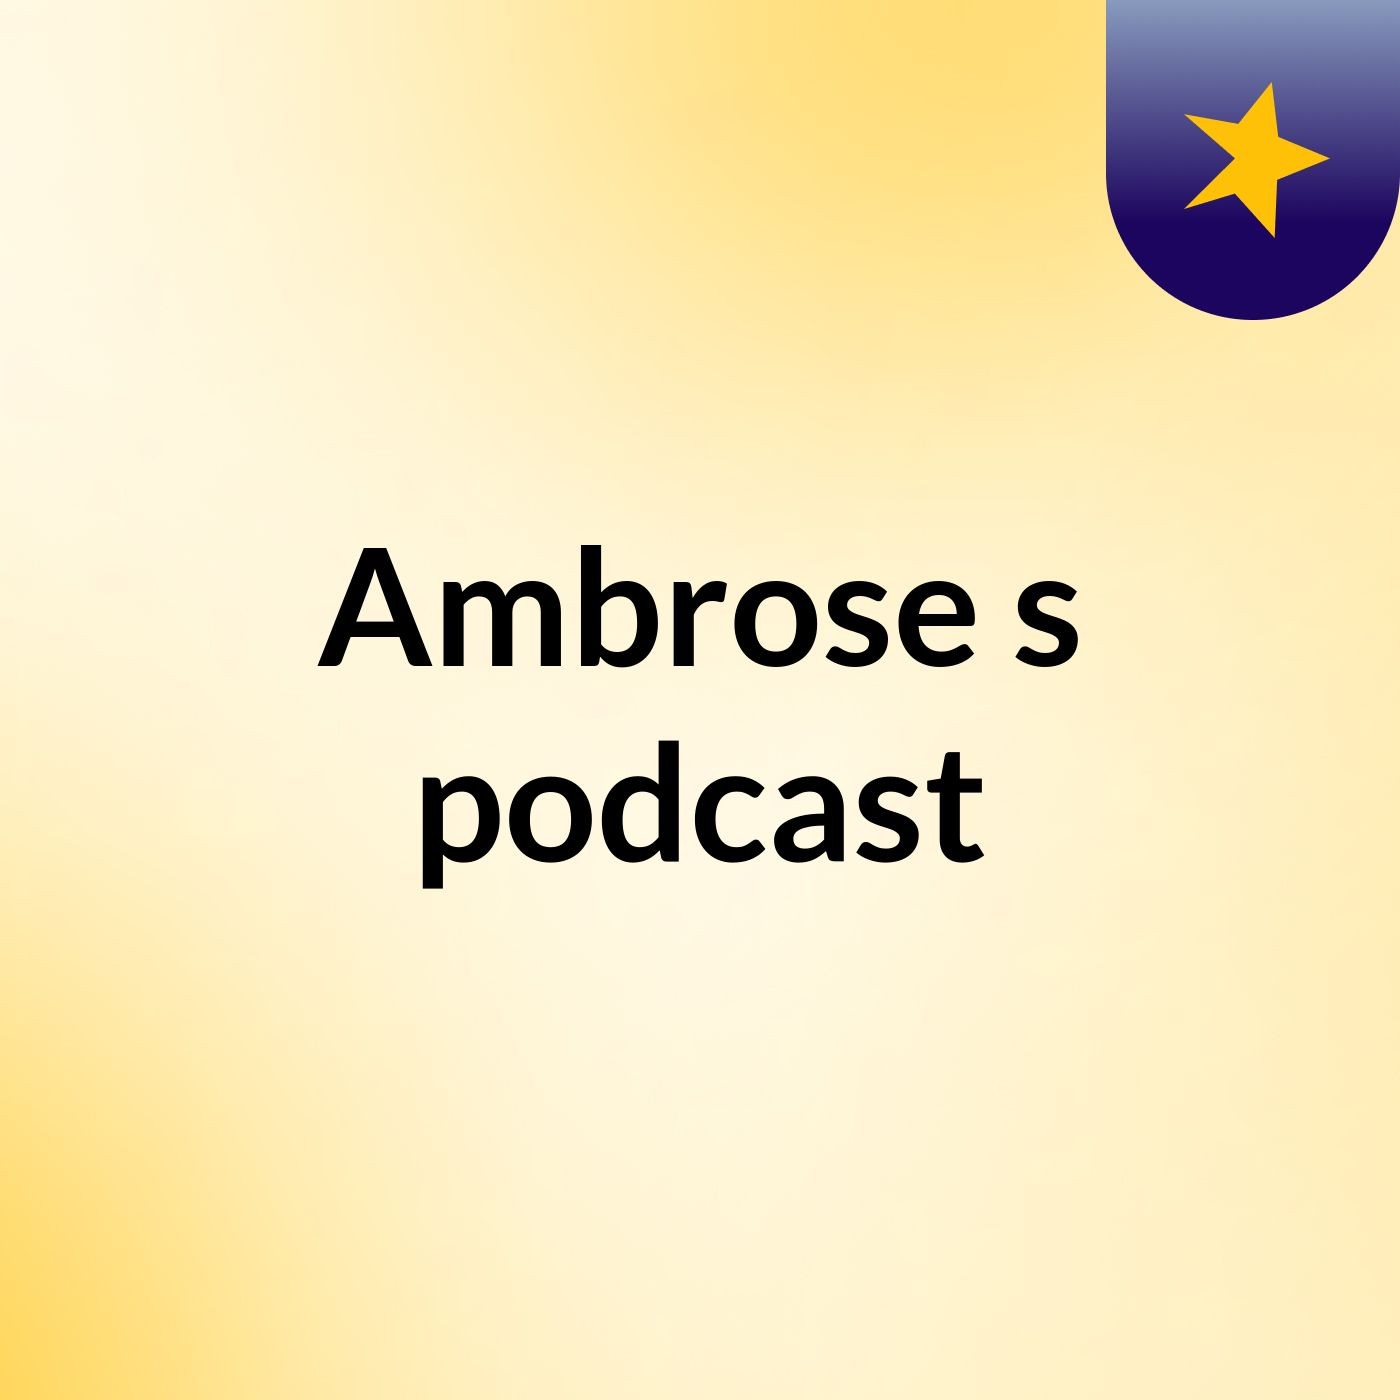 Ambrose's podcast